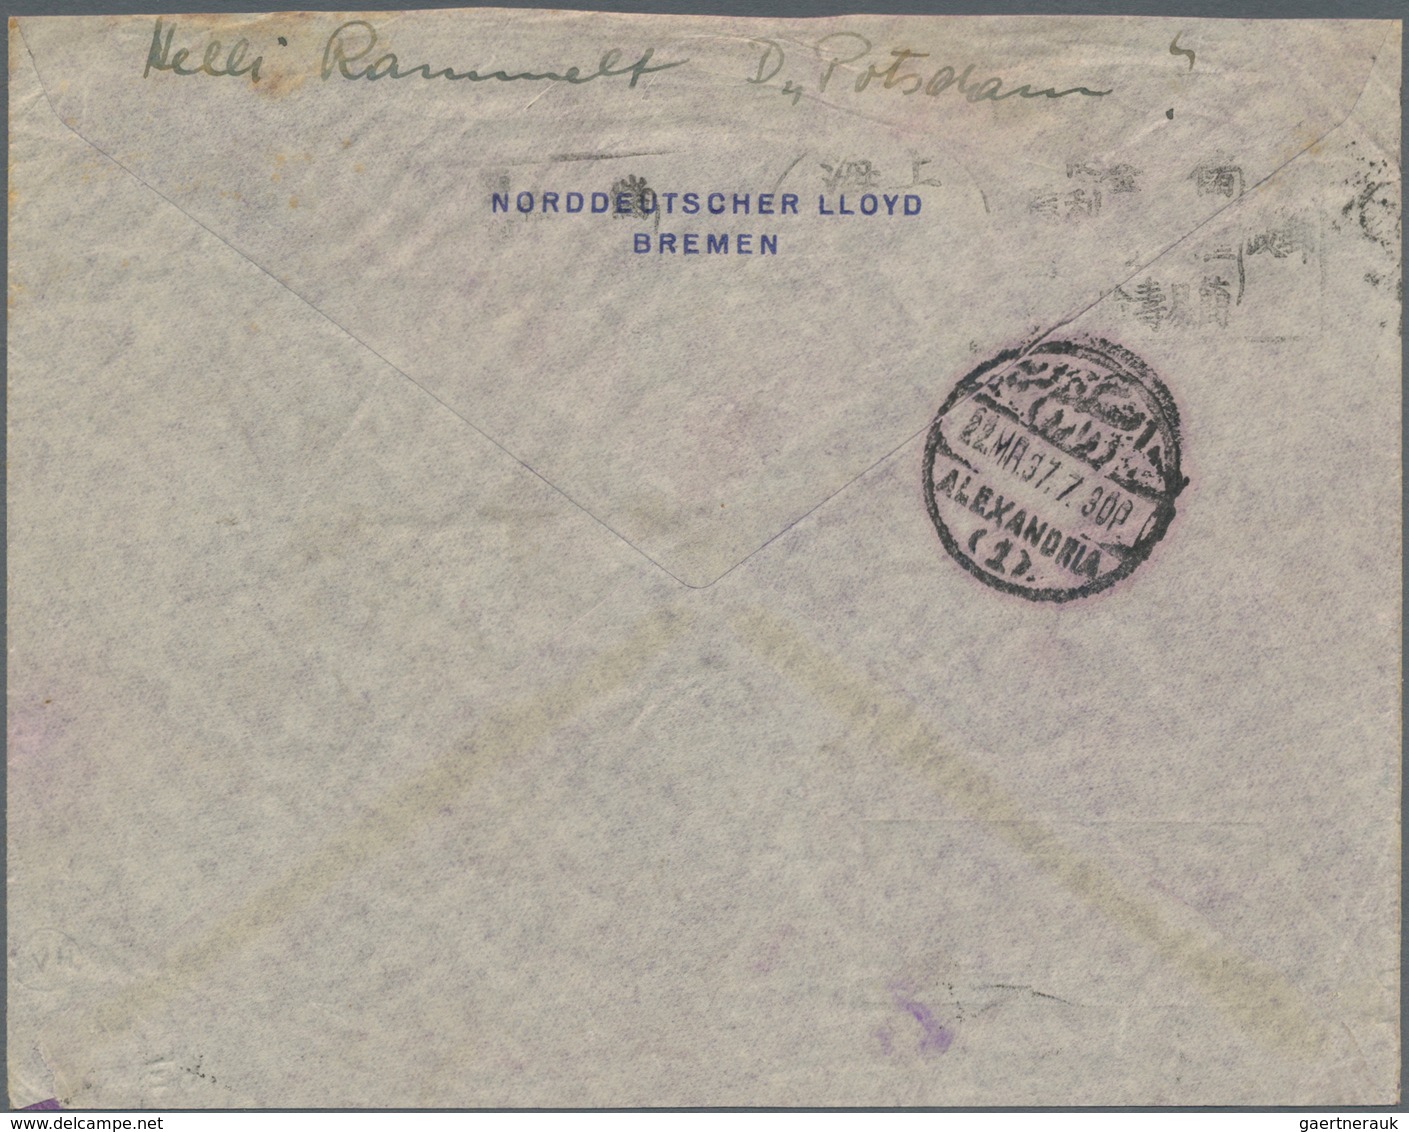 China - Portomarken: 1932, Top Values 20 C., 30 C. Tied "SHANGHAI 15.4.37" To Inbound Airmail Cover - Portomarken